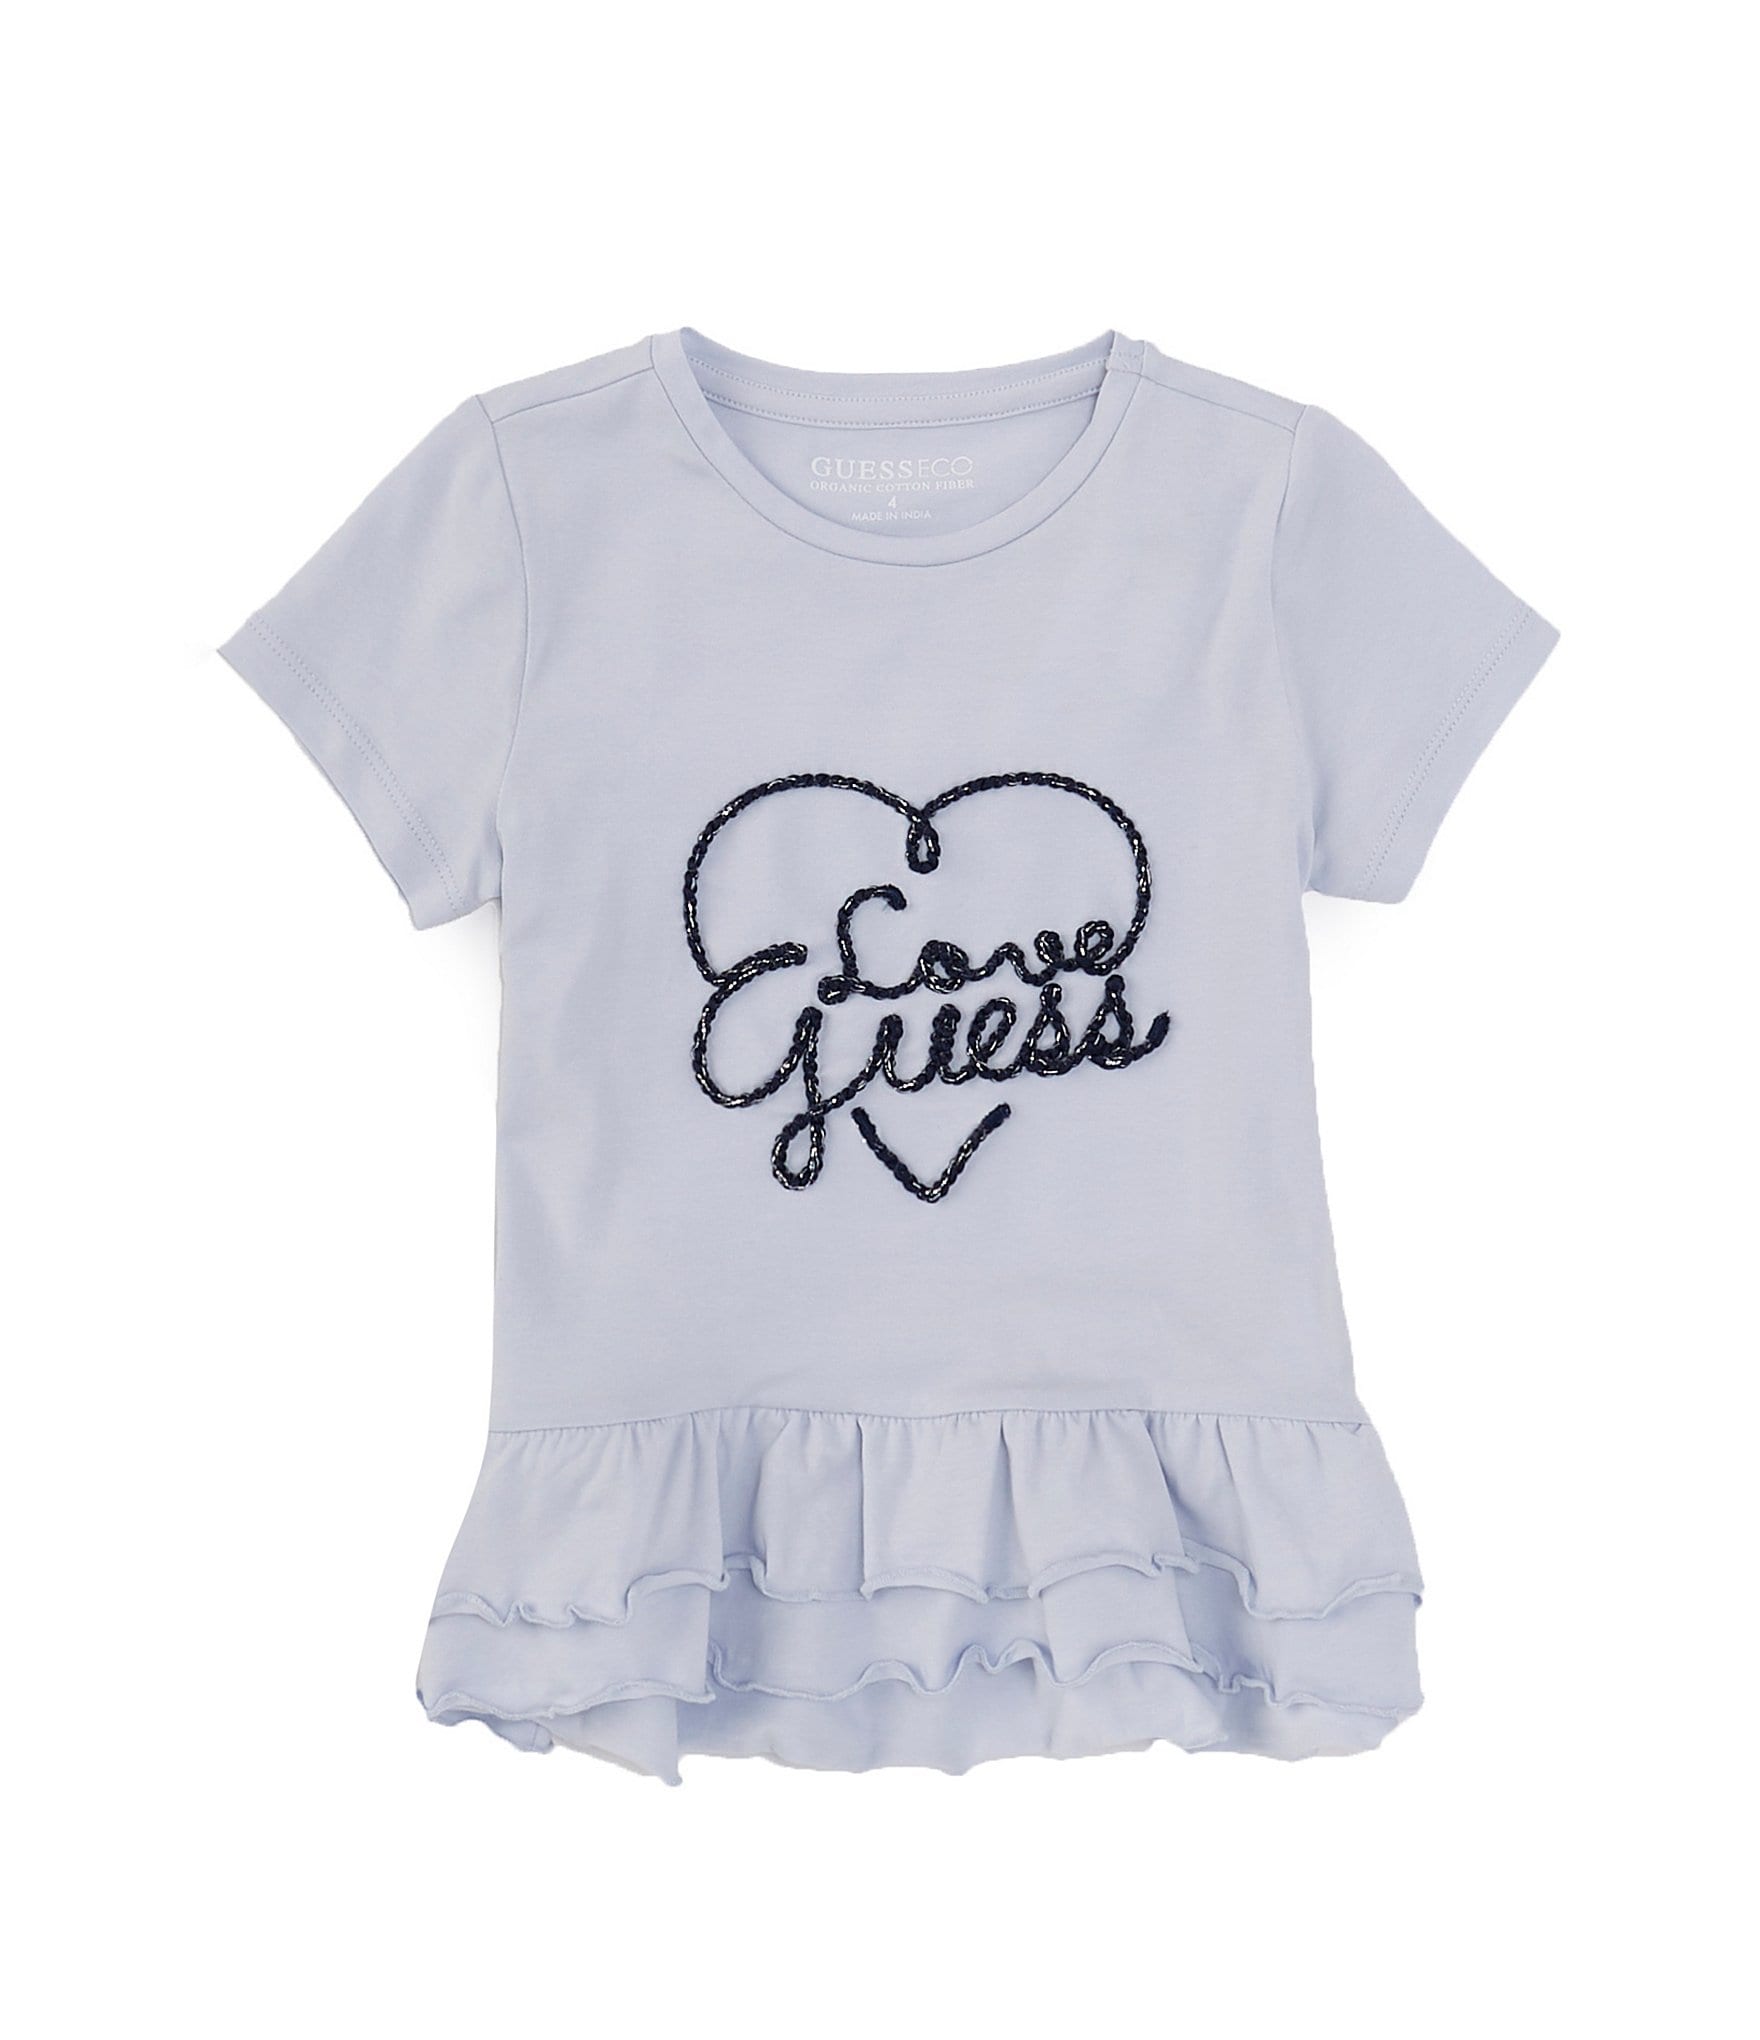 GUESS Baby Girl's Ruffle Graphic T-Shirt & Printed Leggings Set